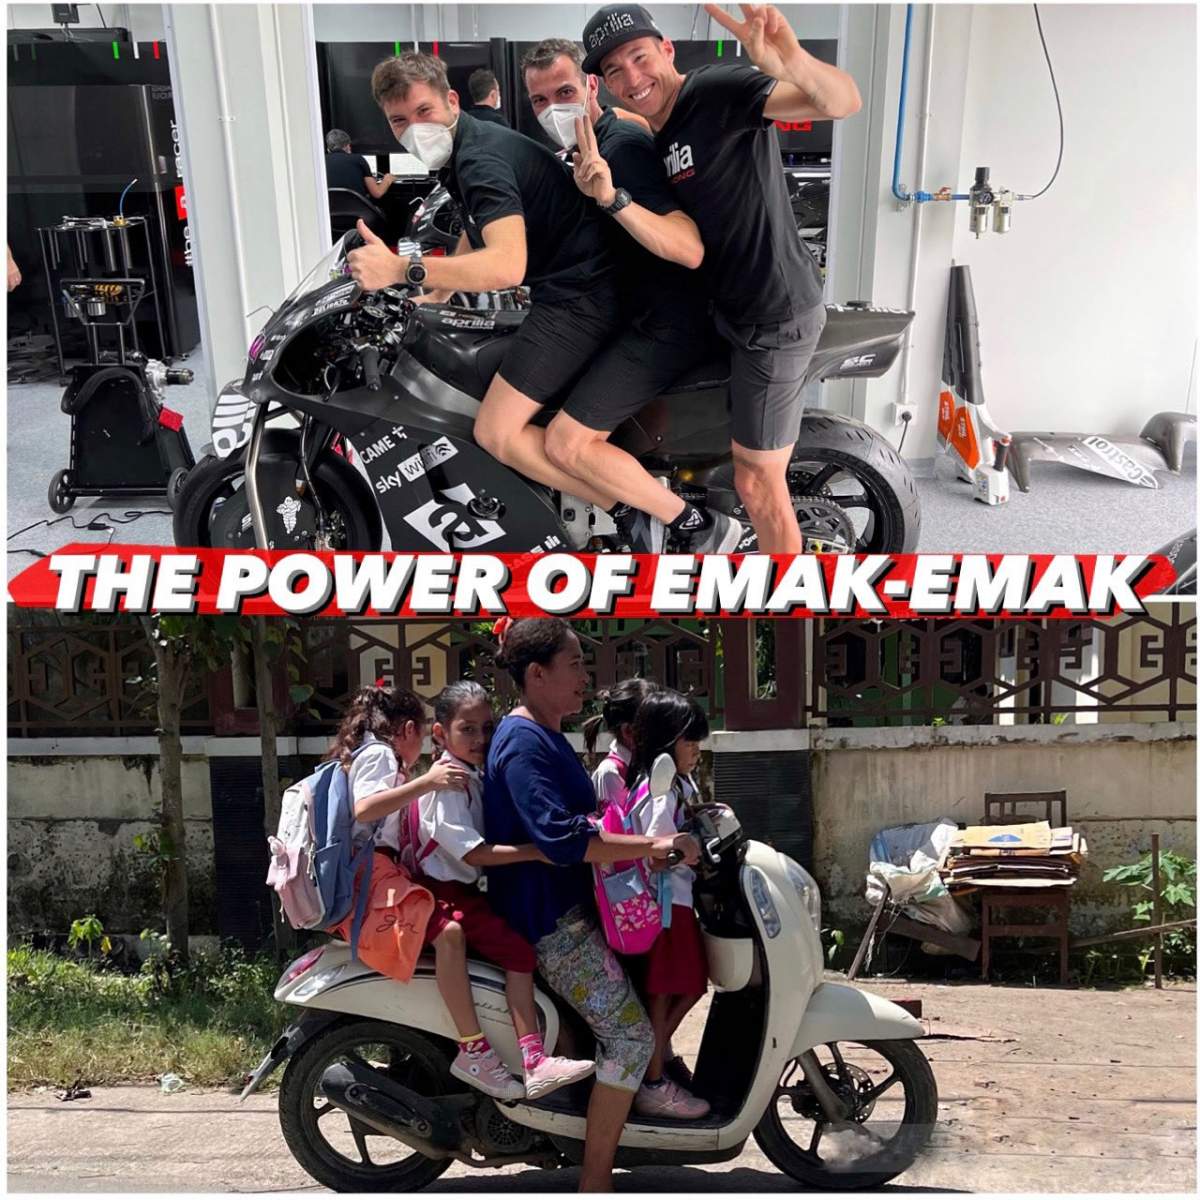 Amazing The Power of Emak-Emak! Ini MotoGP Style, Aleix Espargaro Sampai Tiru Gaya Emak